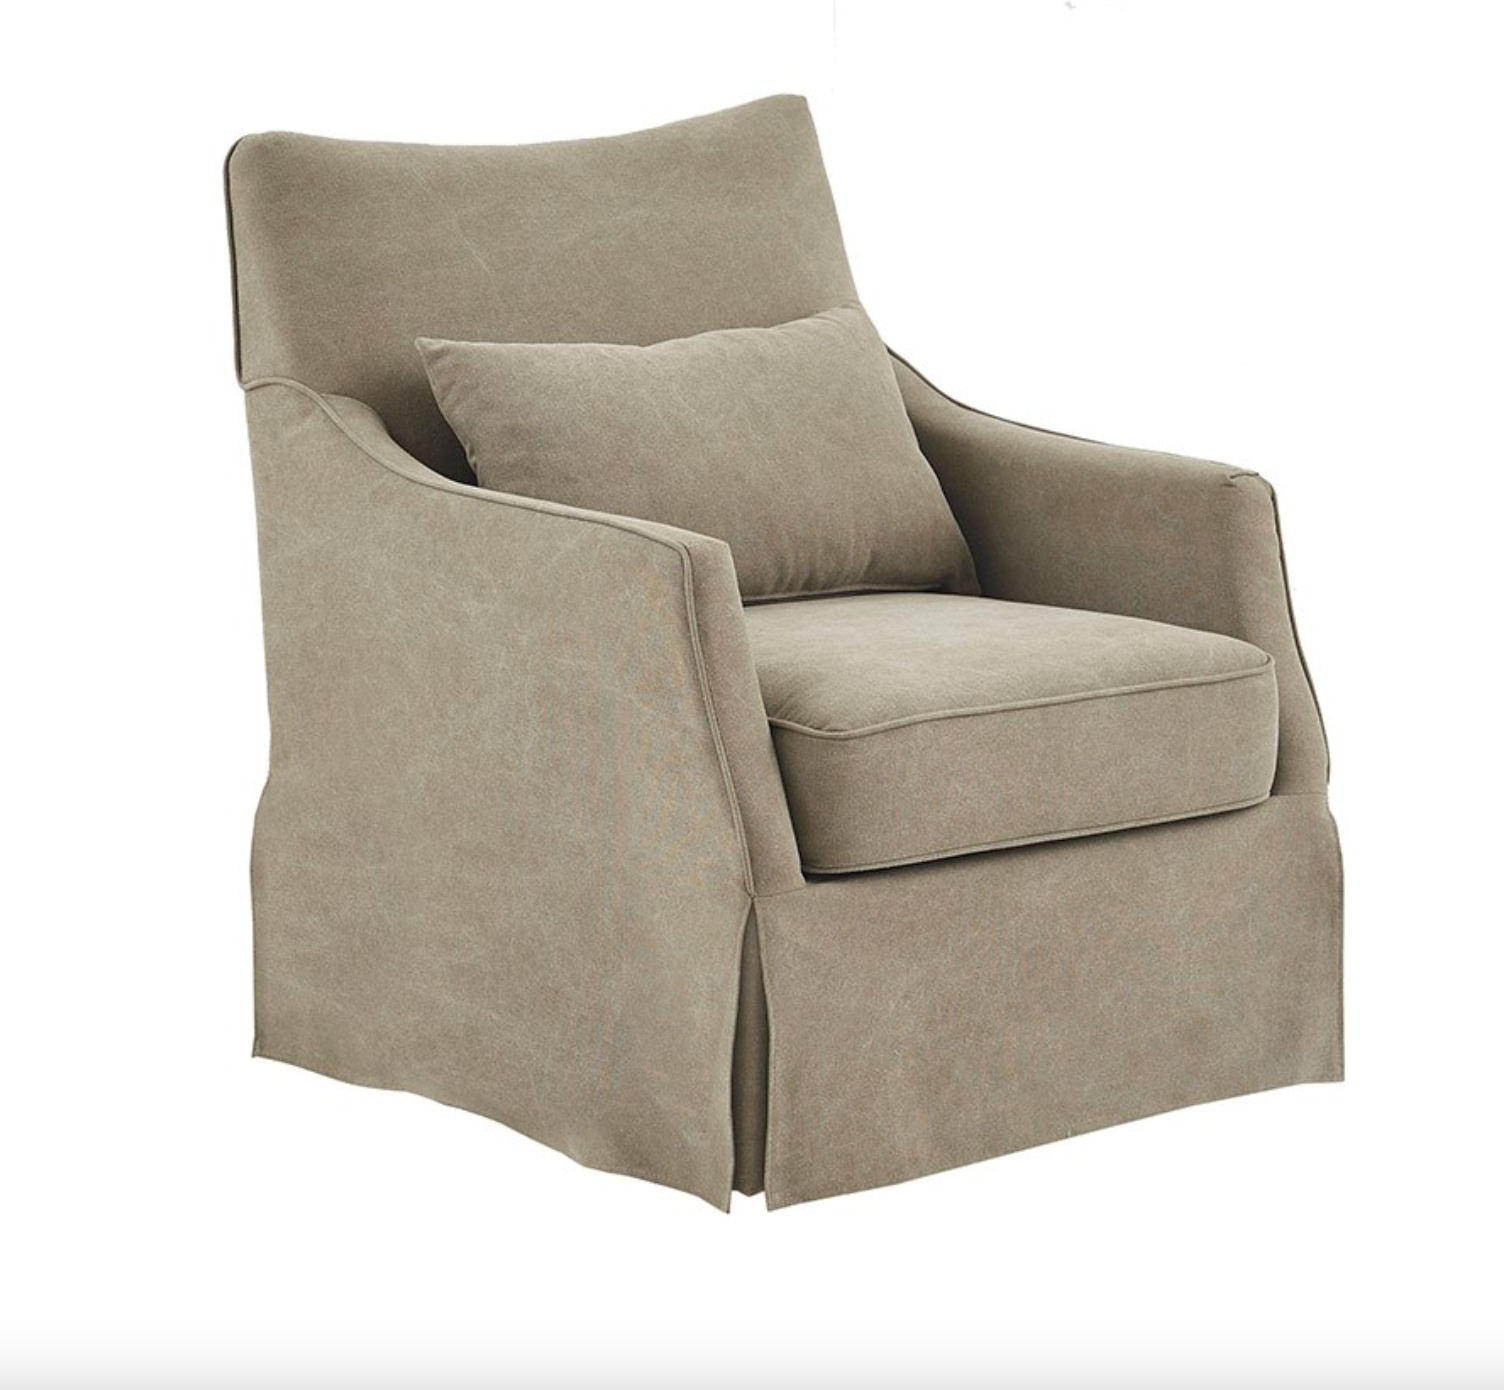 Swivel Chair, London - Danshire Market and Design 